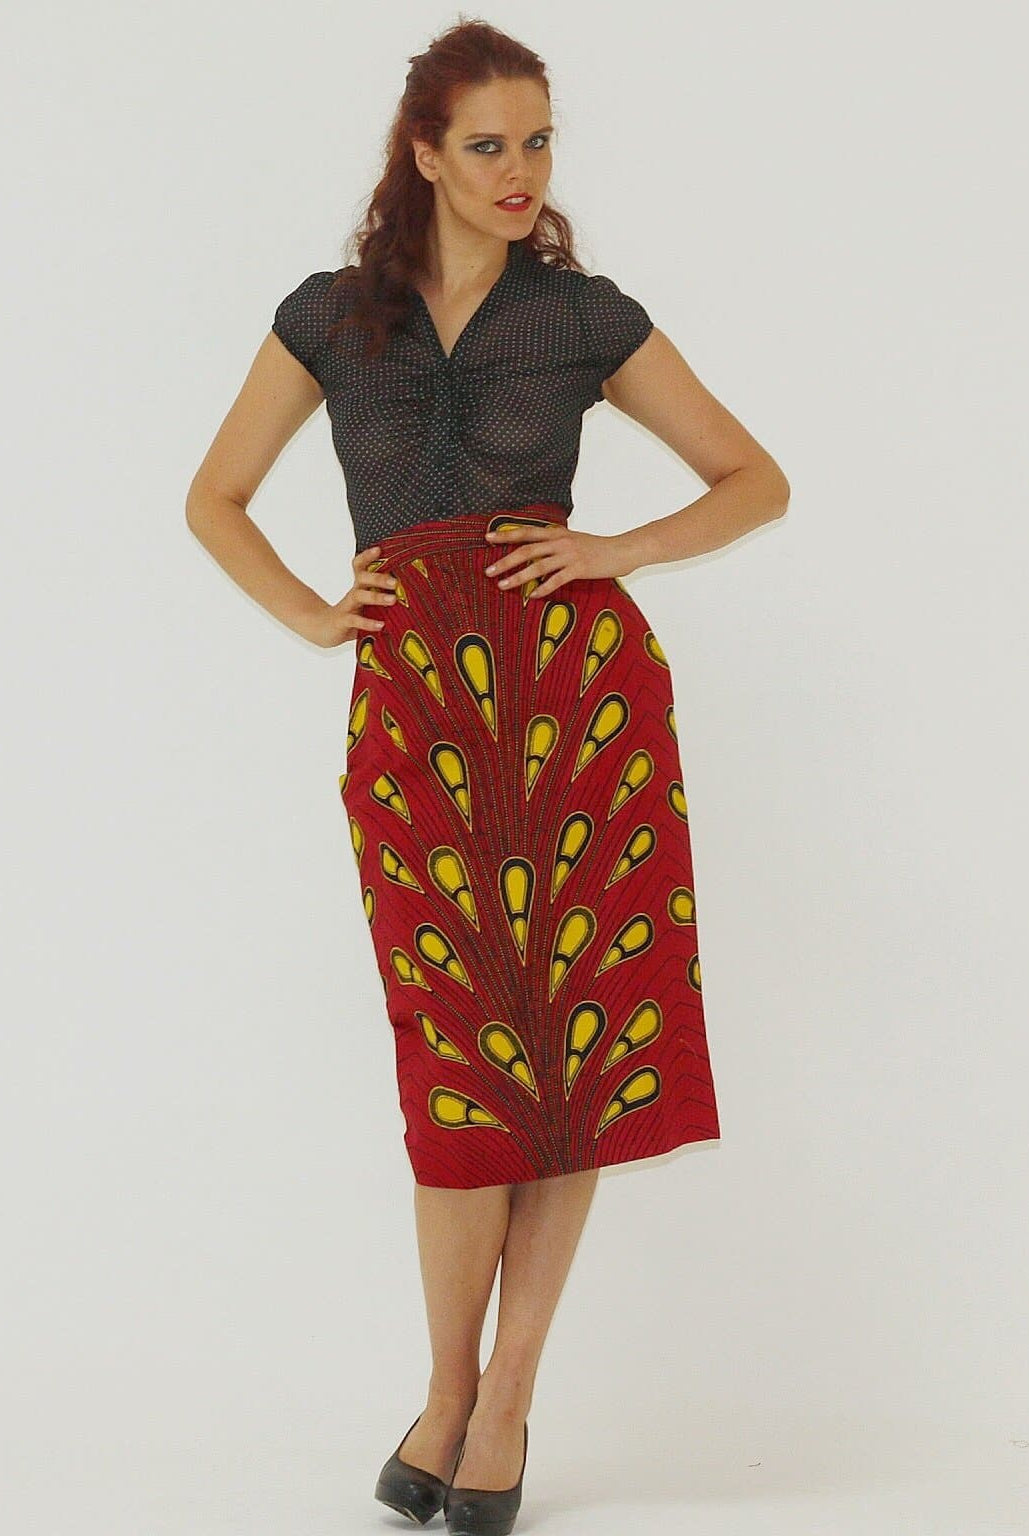 African Print Ankara batik Pencil skirts - African Clothing from CUMO LONDON